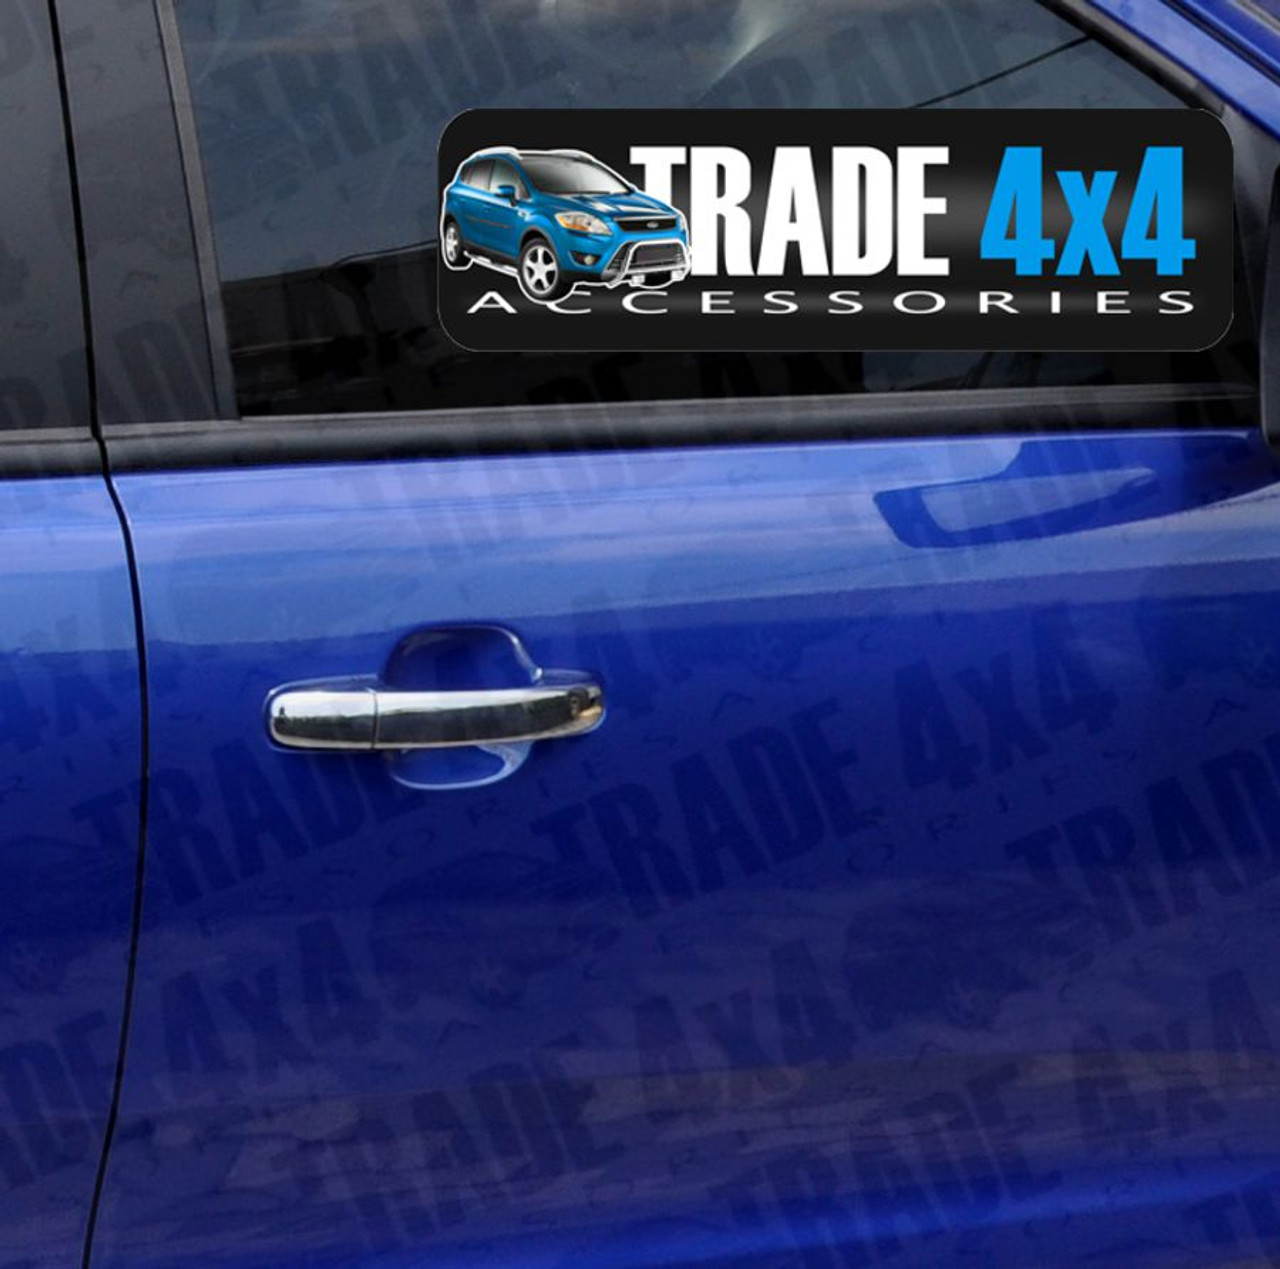 Door Handle Cover Set - Chrome - for Ford Ranger 2012 + – Powerful UK